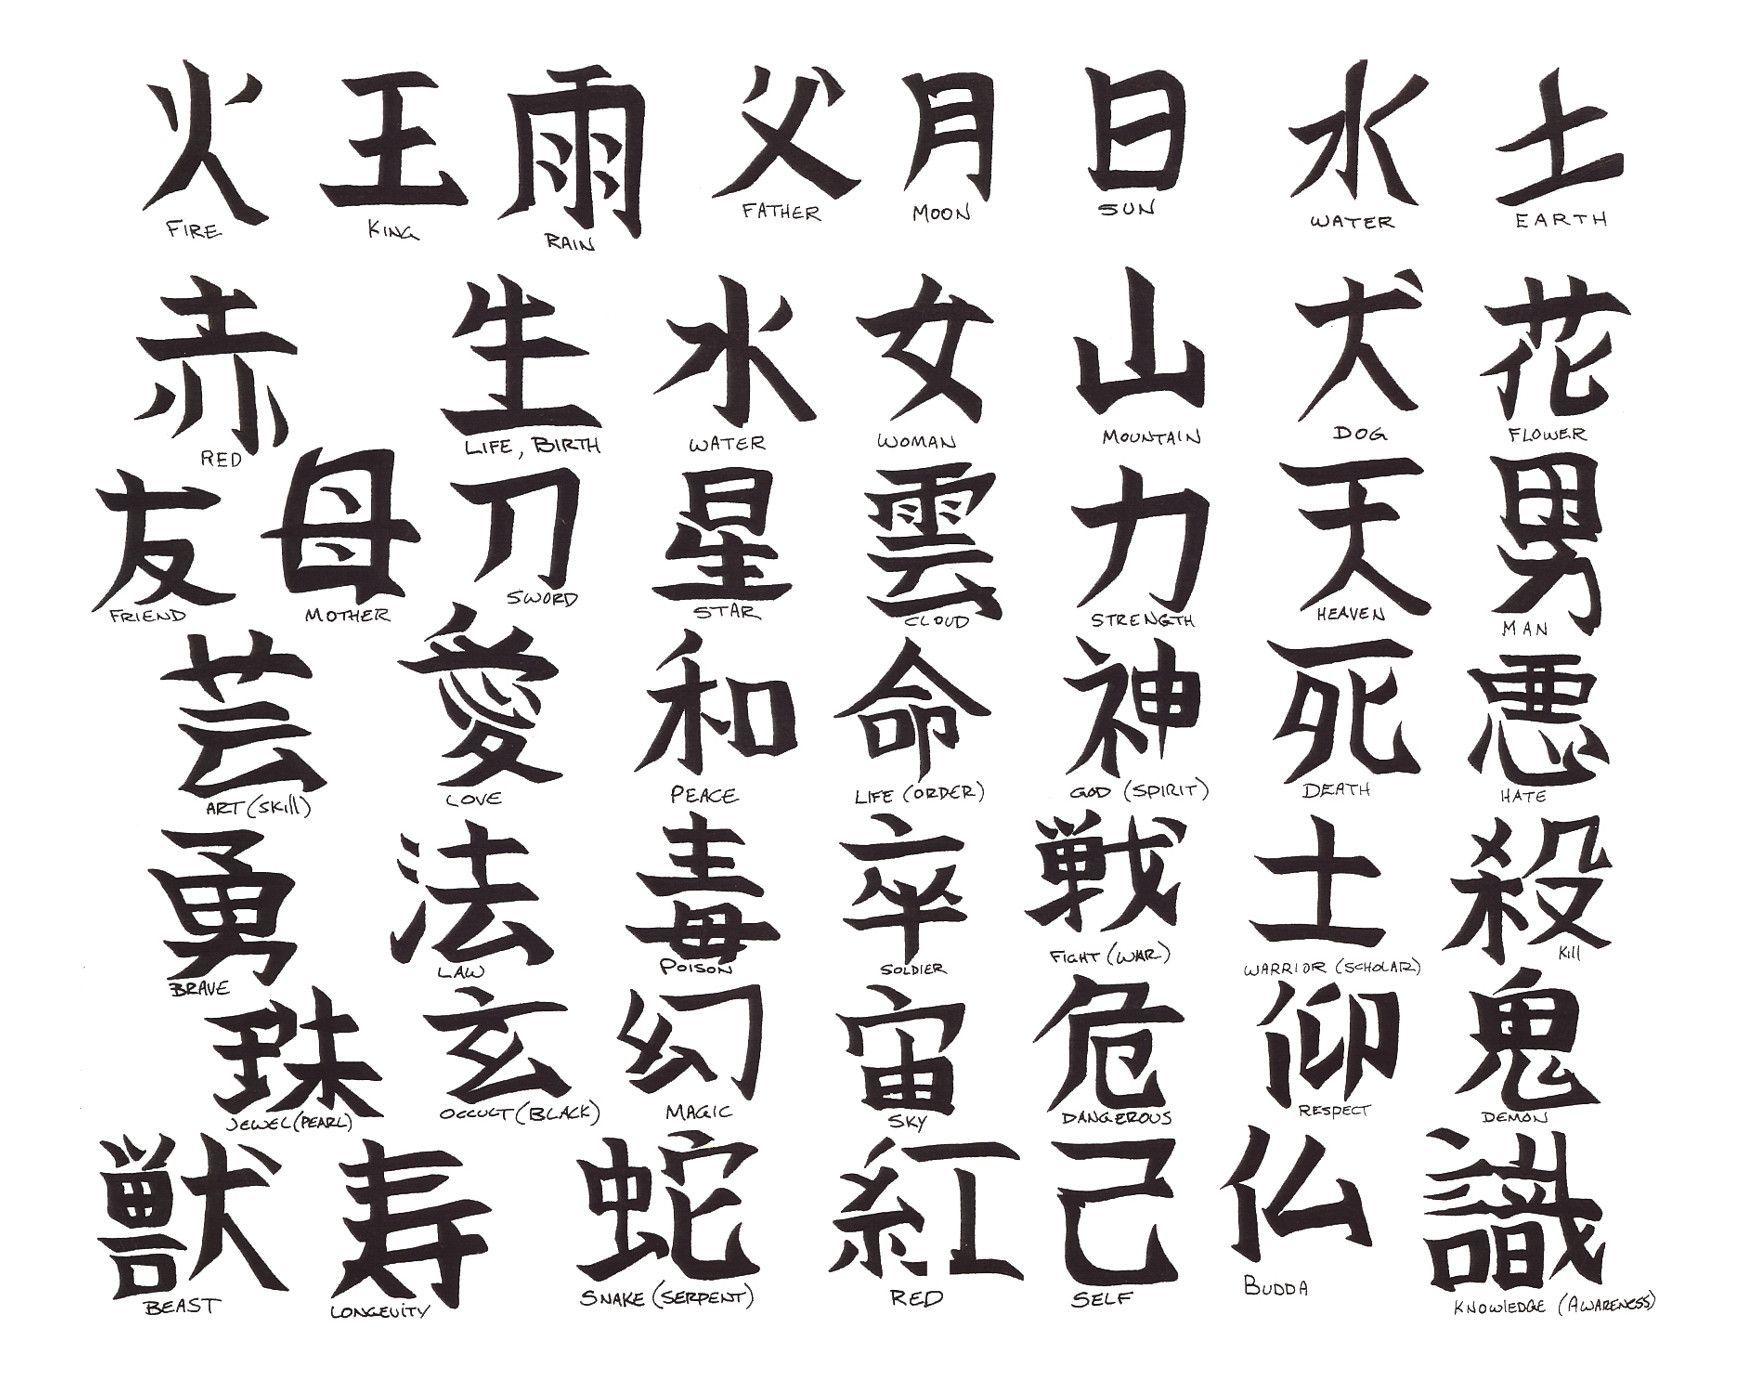 Wallpaper Tulisan Mandarin 3d Image Num 79